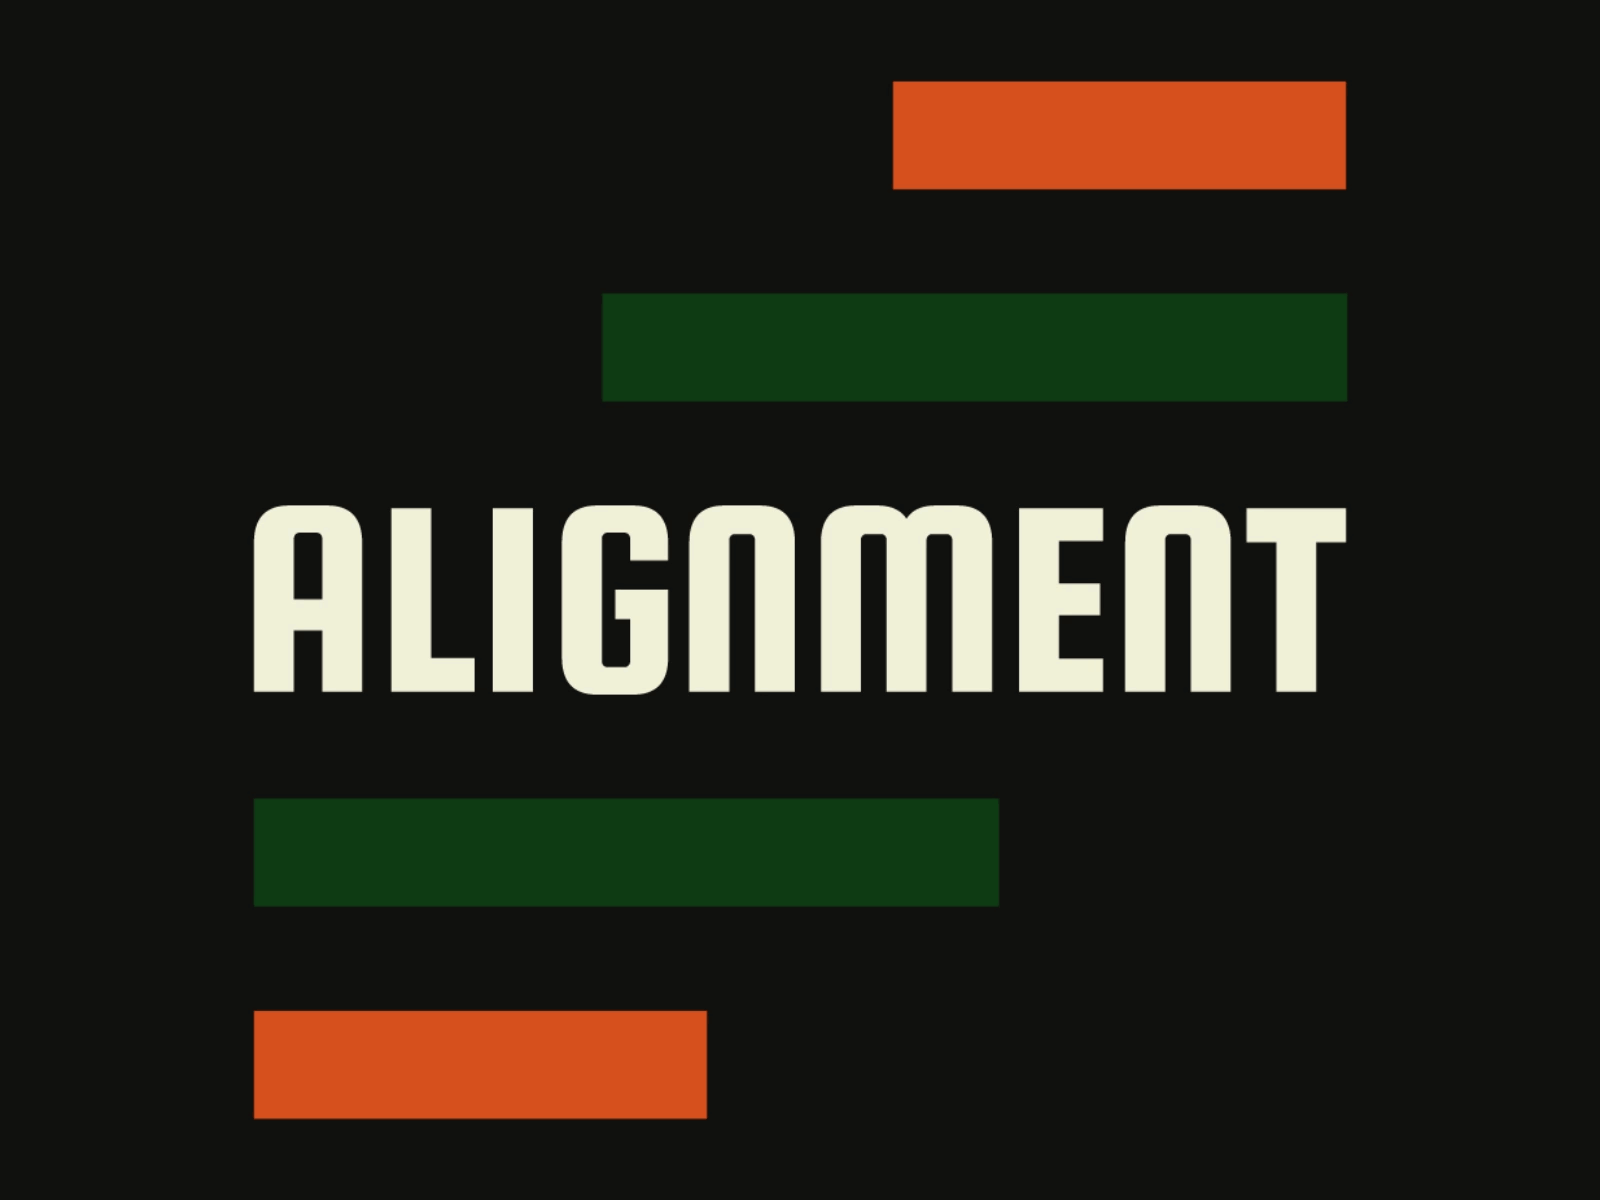 Design Principles Animation — Alignment